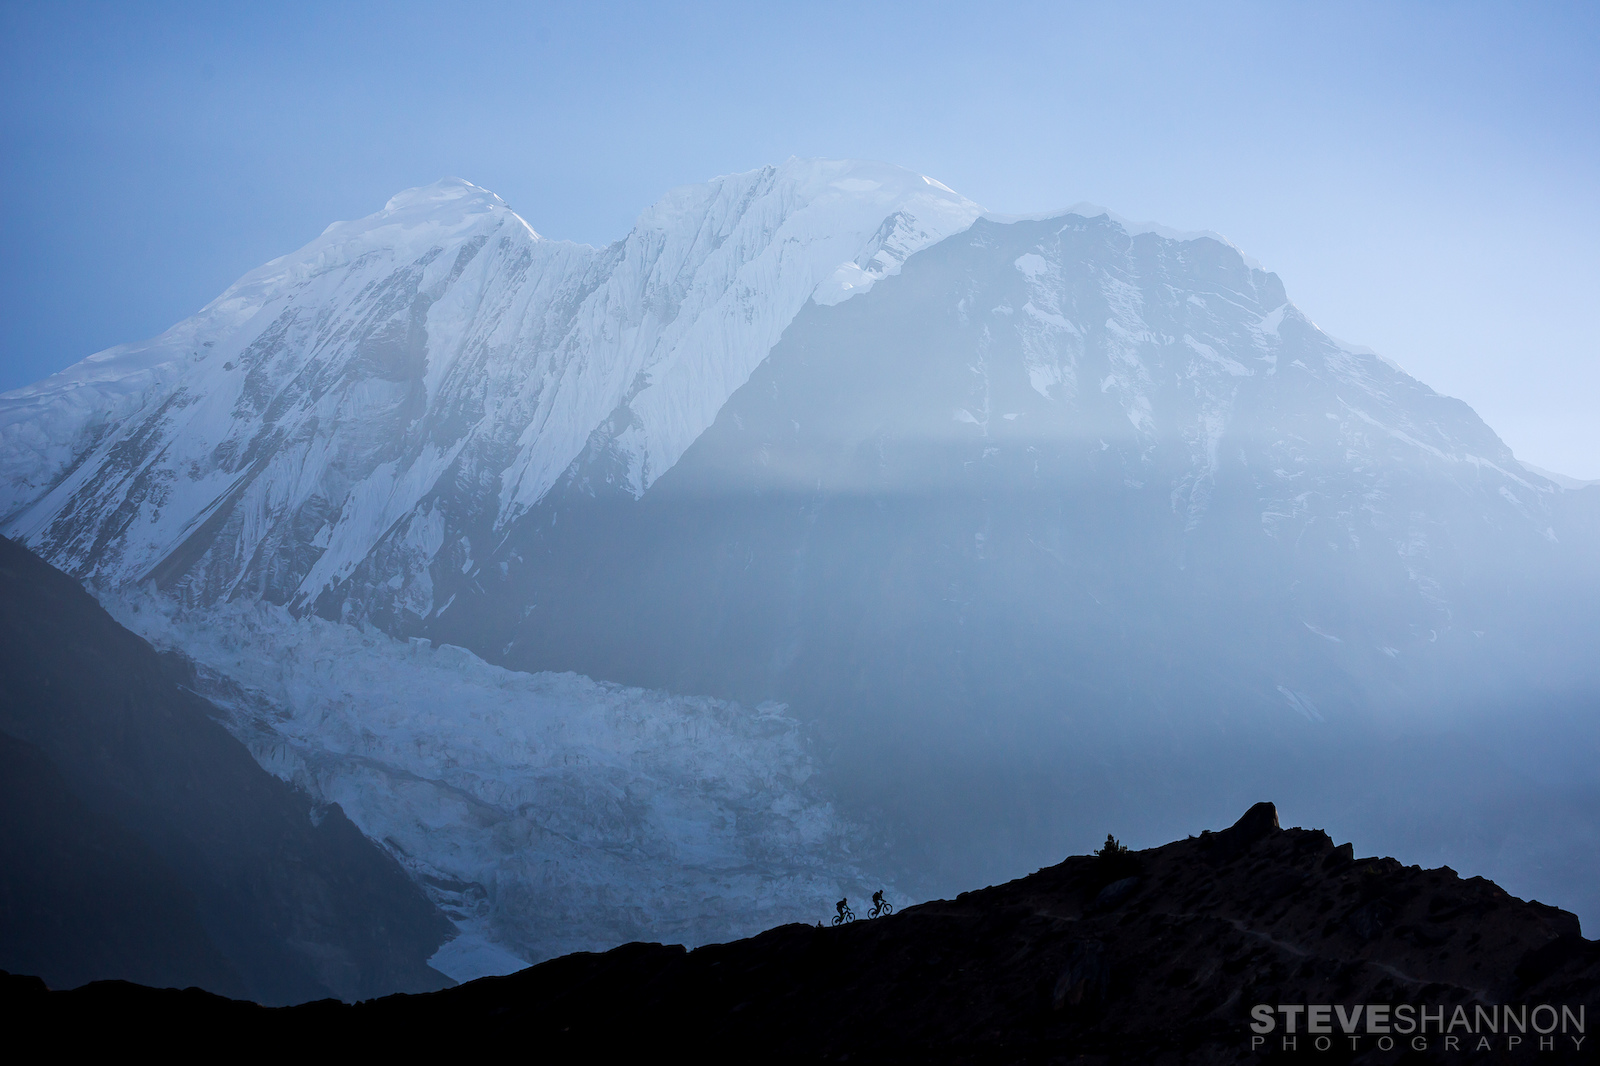 Mountain bikers silhouetted against the massive Himalayan peak, Gangapurna (7455m).